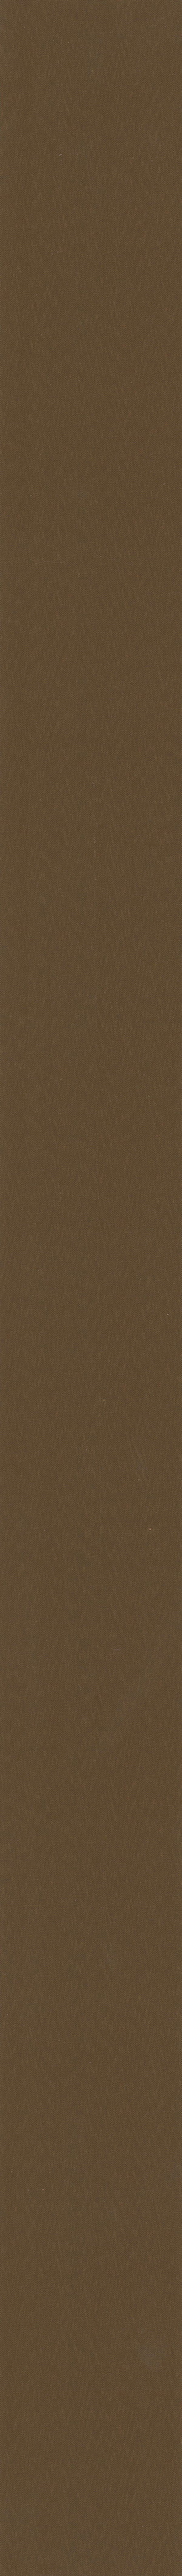 Ткань-Мадагаскар-коричневый